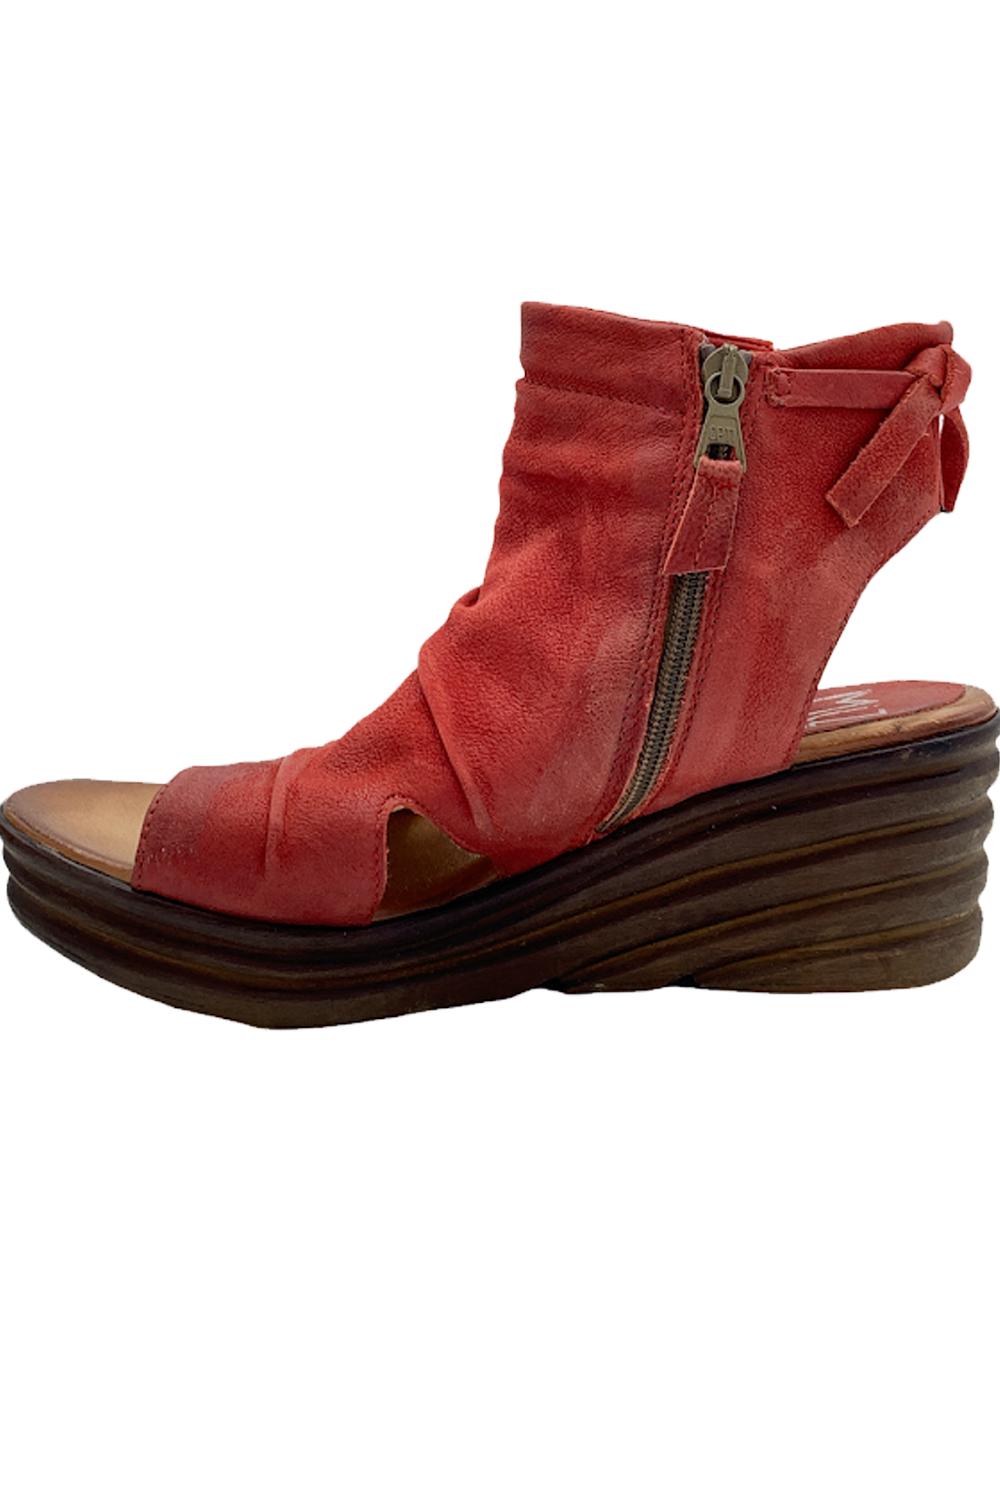  Miz Mooz Scarlett Women's Heeled Boot